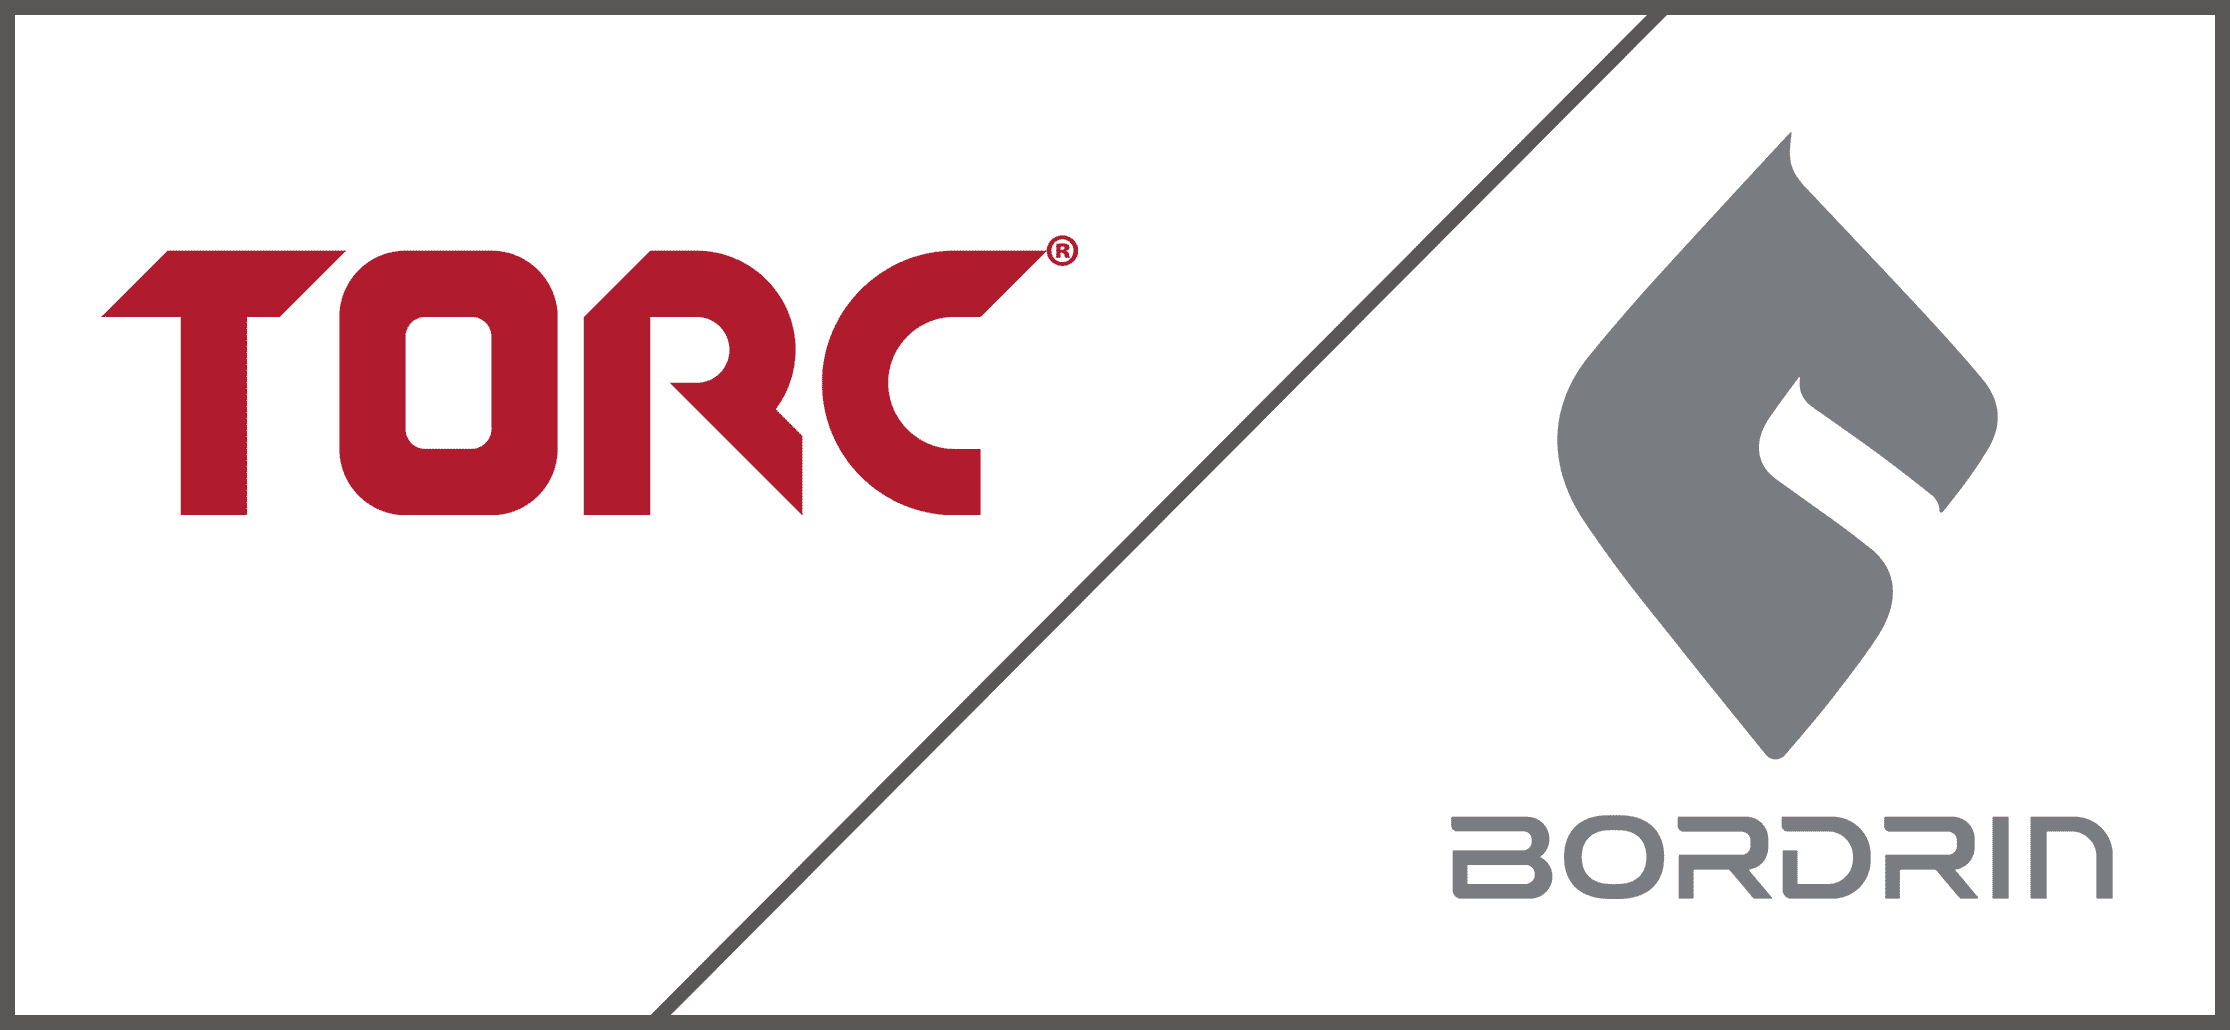 Torc and Bordrin logos.